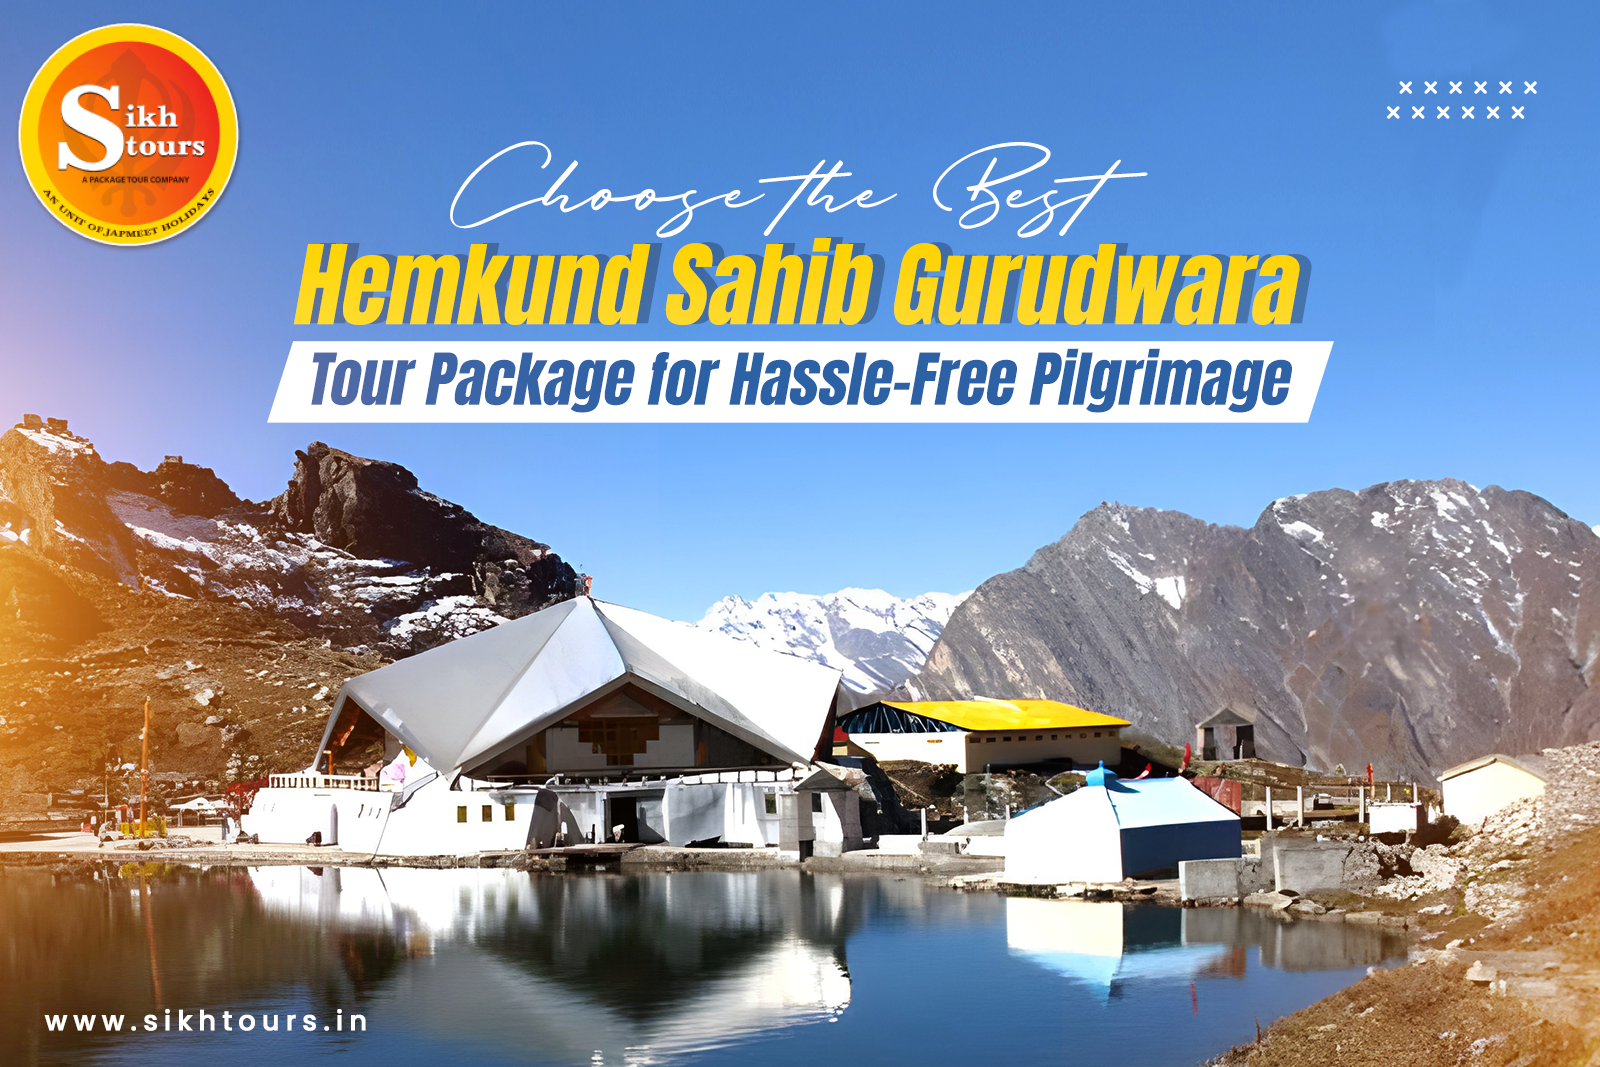 Choose the Best Hemkund Sahib Gurudwara Tour Package for a Hassle-Free Pilgrimage